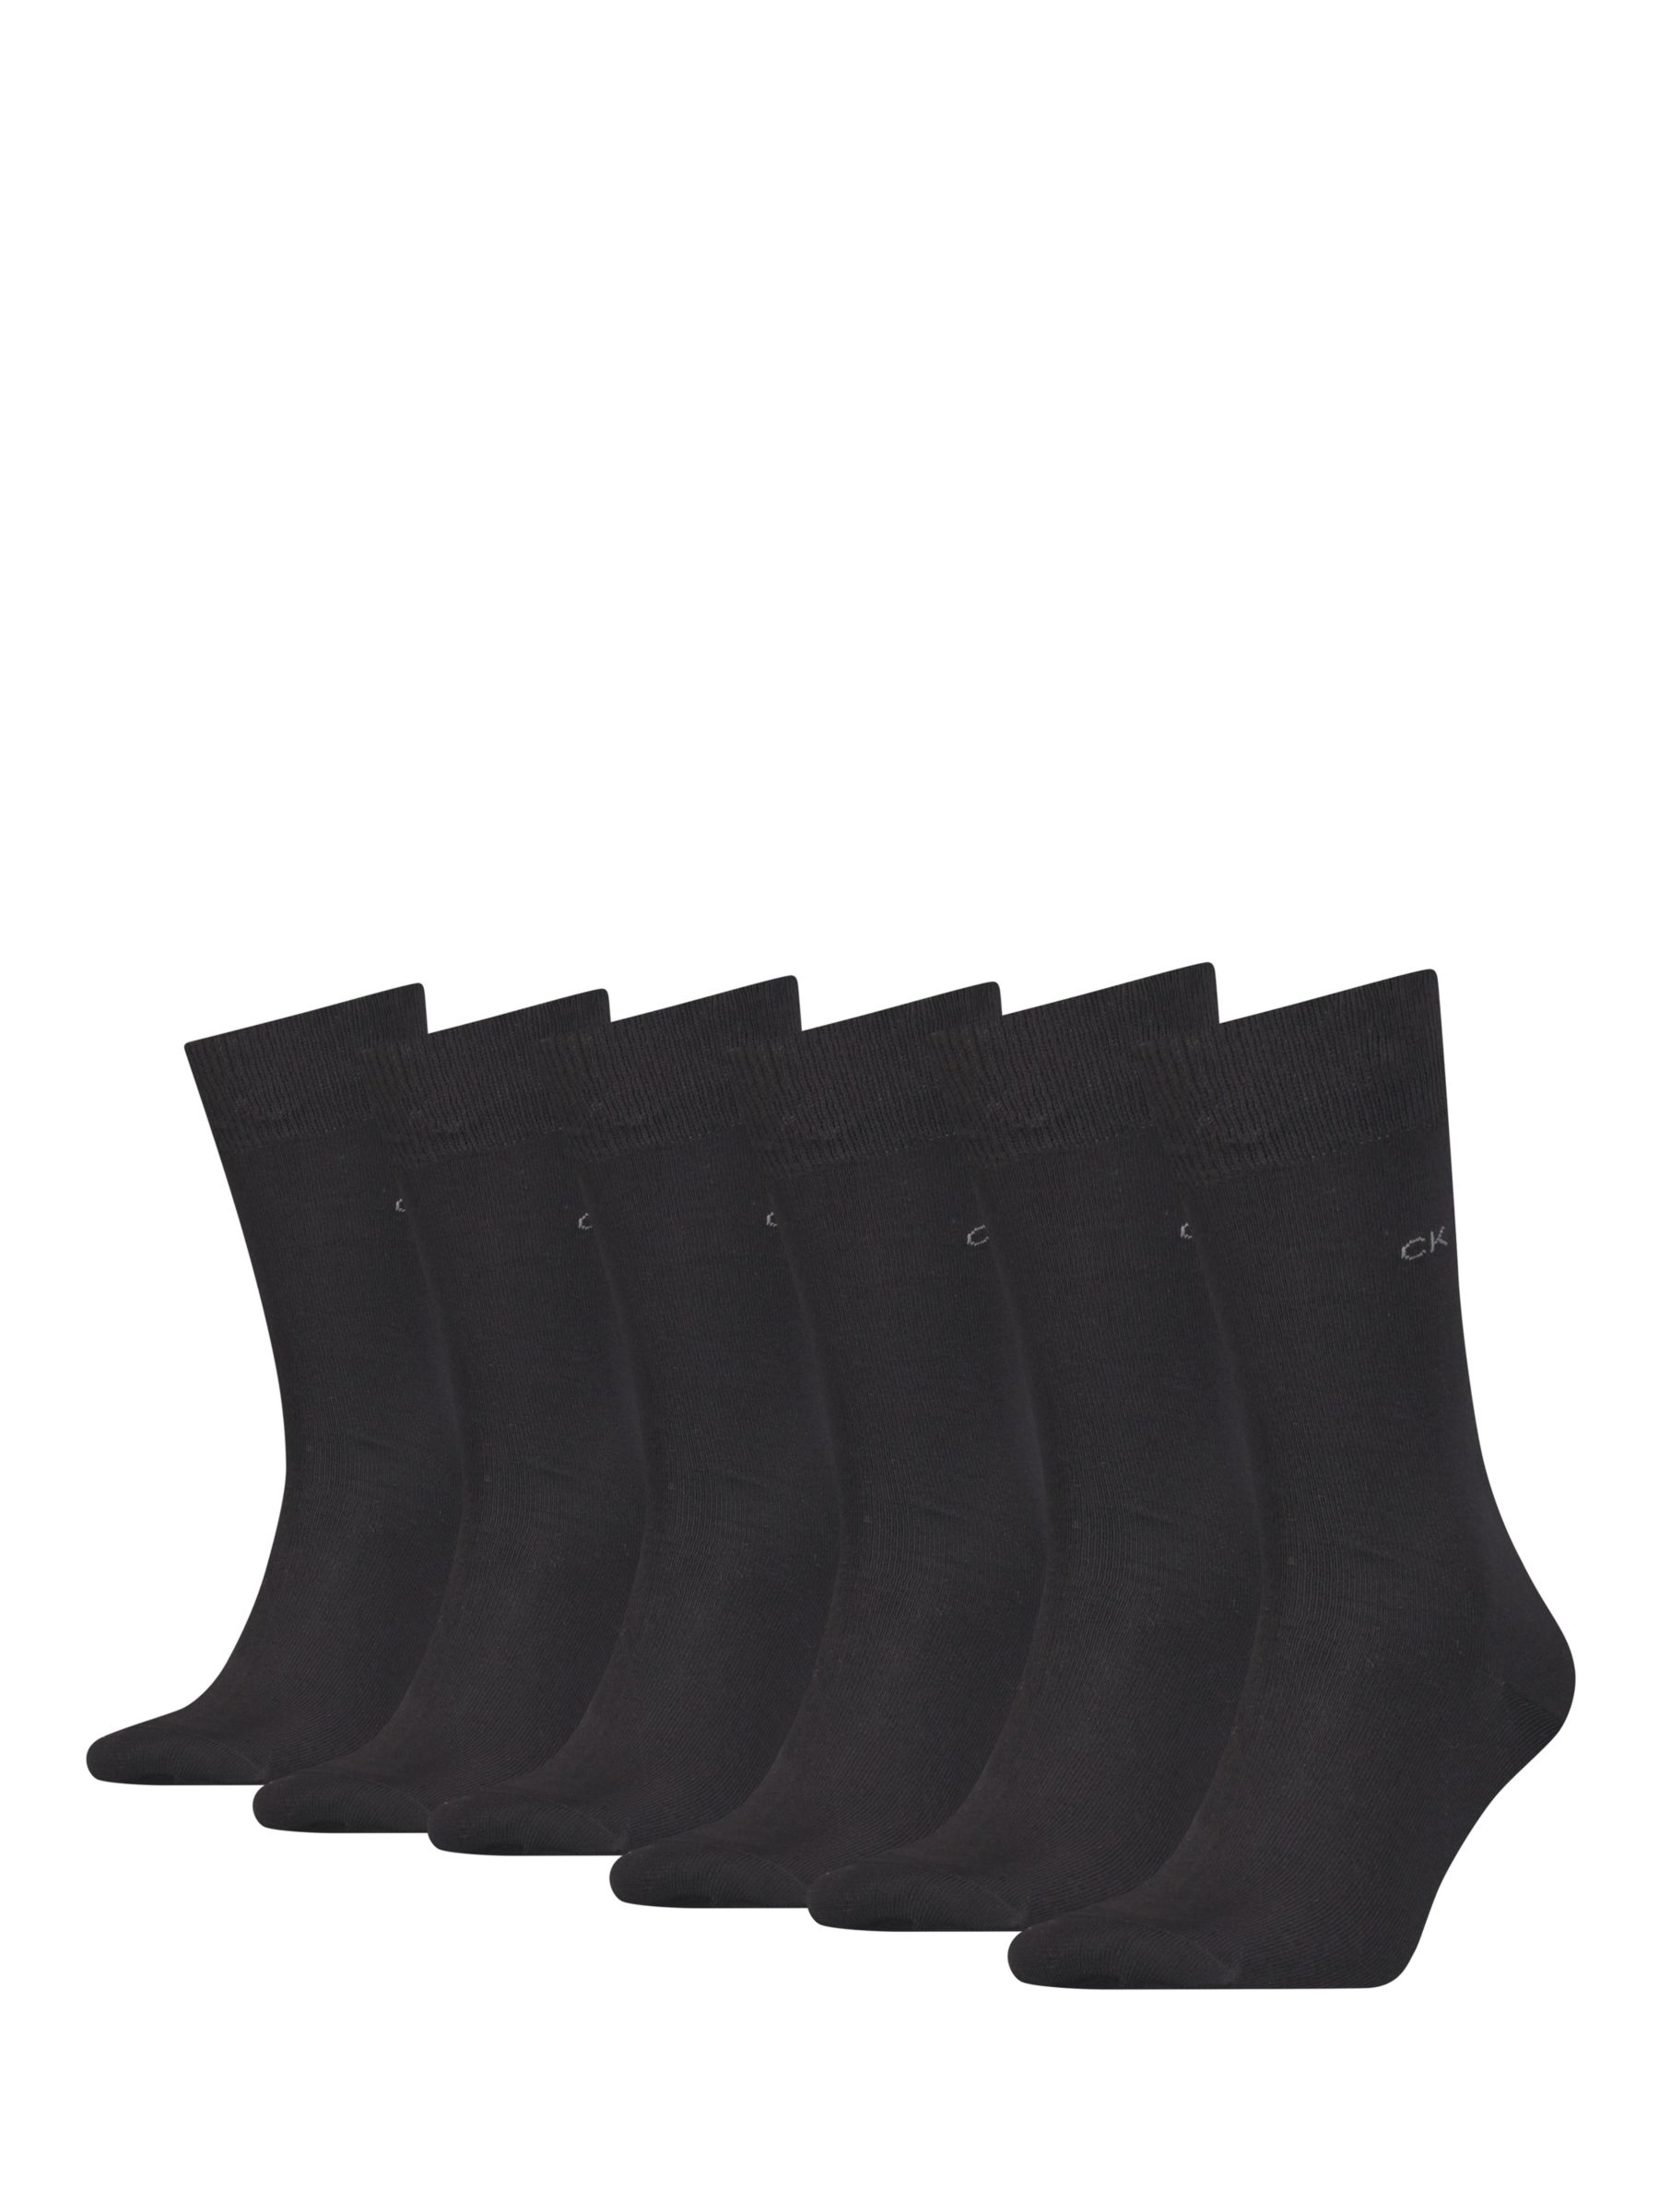 Calvin Klein Logo Ankle Socks, One Size, Pack of 6, 001 Black, S-M